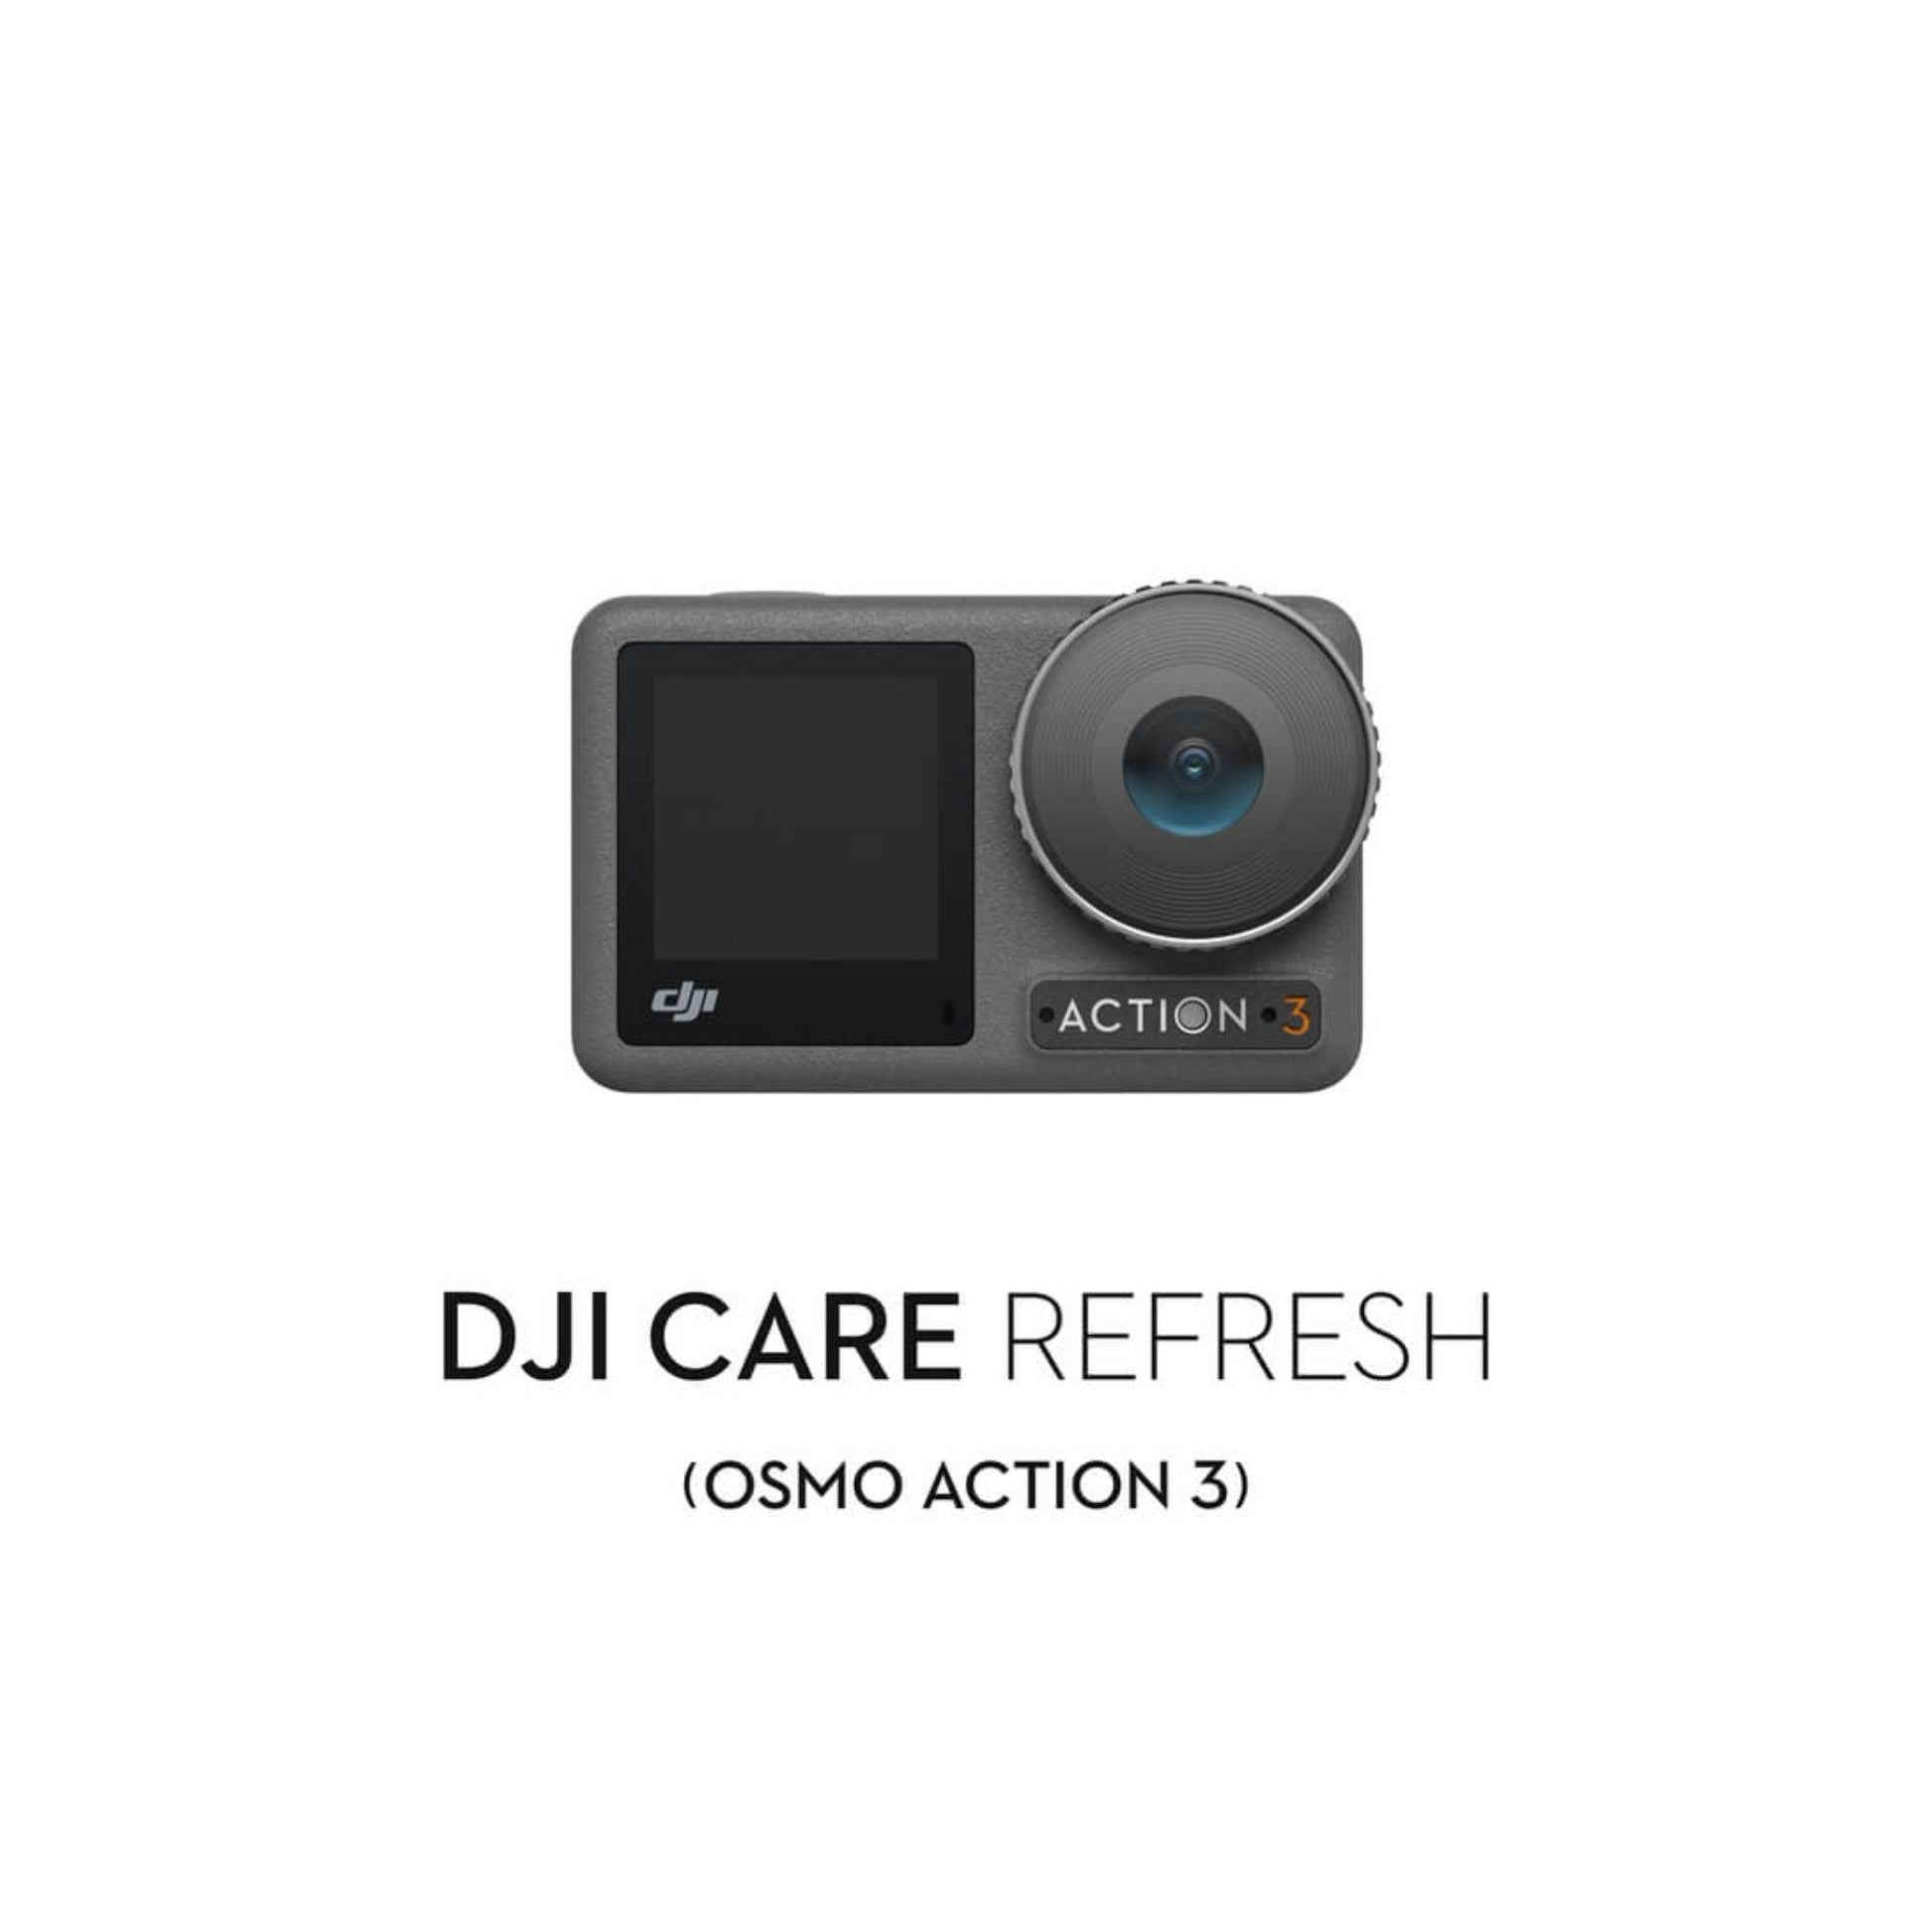 DJI Care Refresh 2-Year Plan (Osmo Action 3) - Silverlight Optics